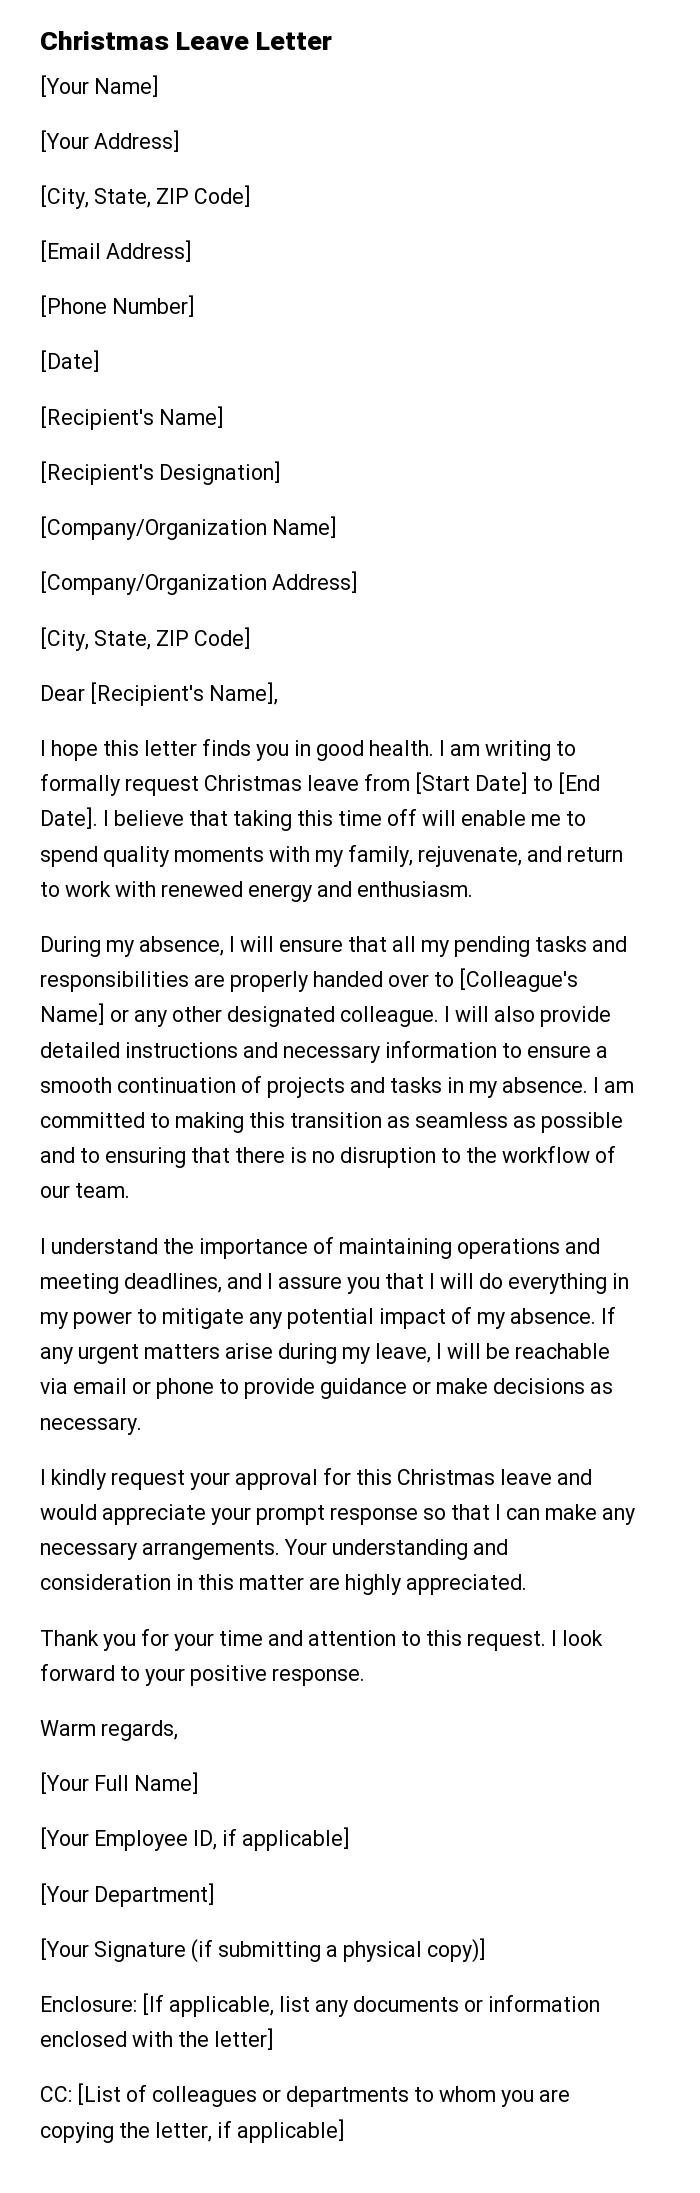 Christmas Leave Letter